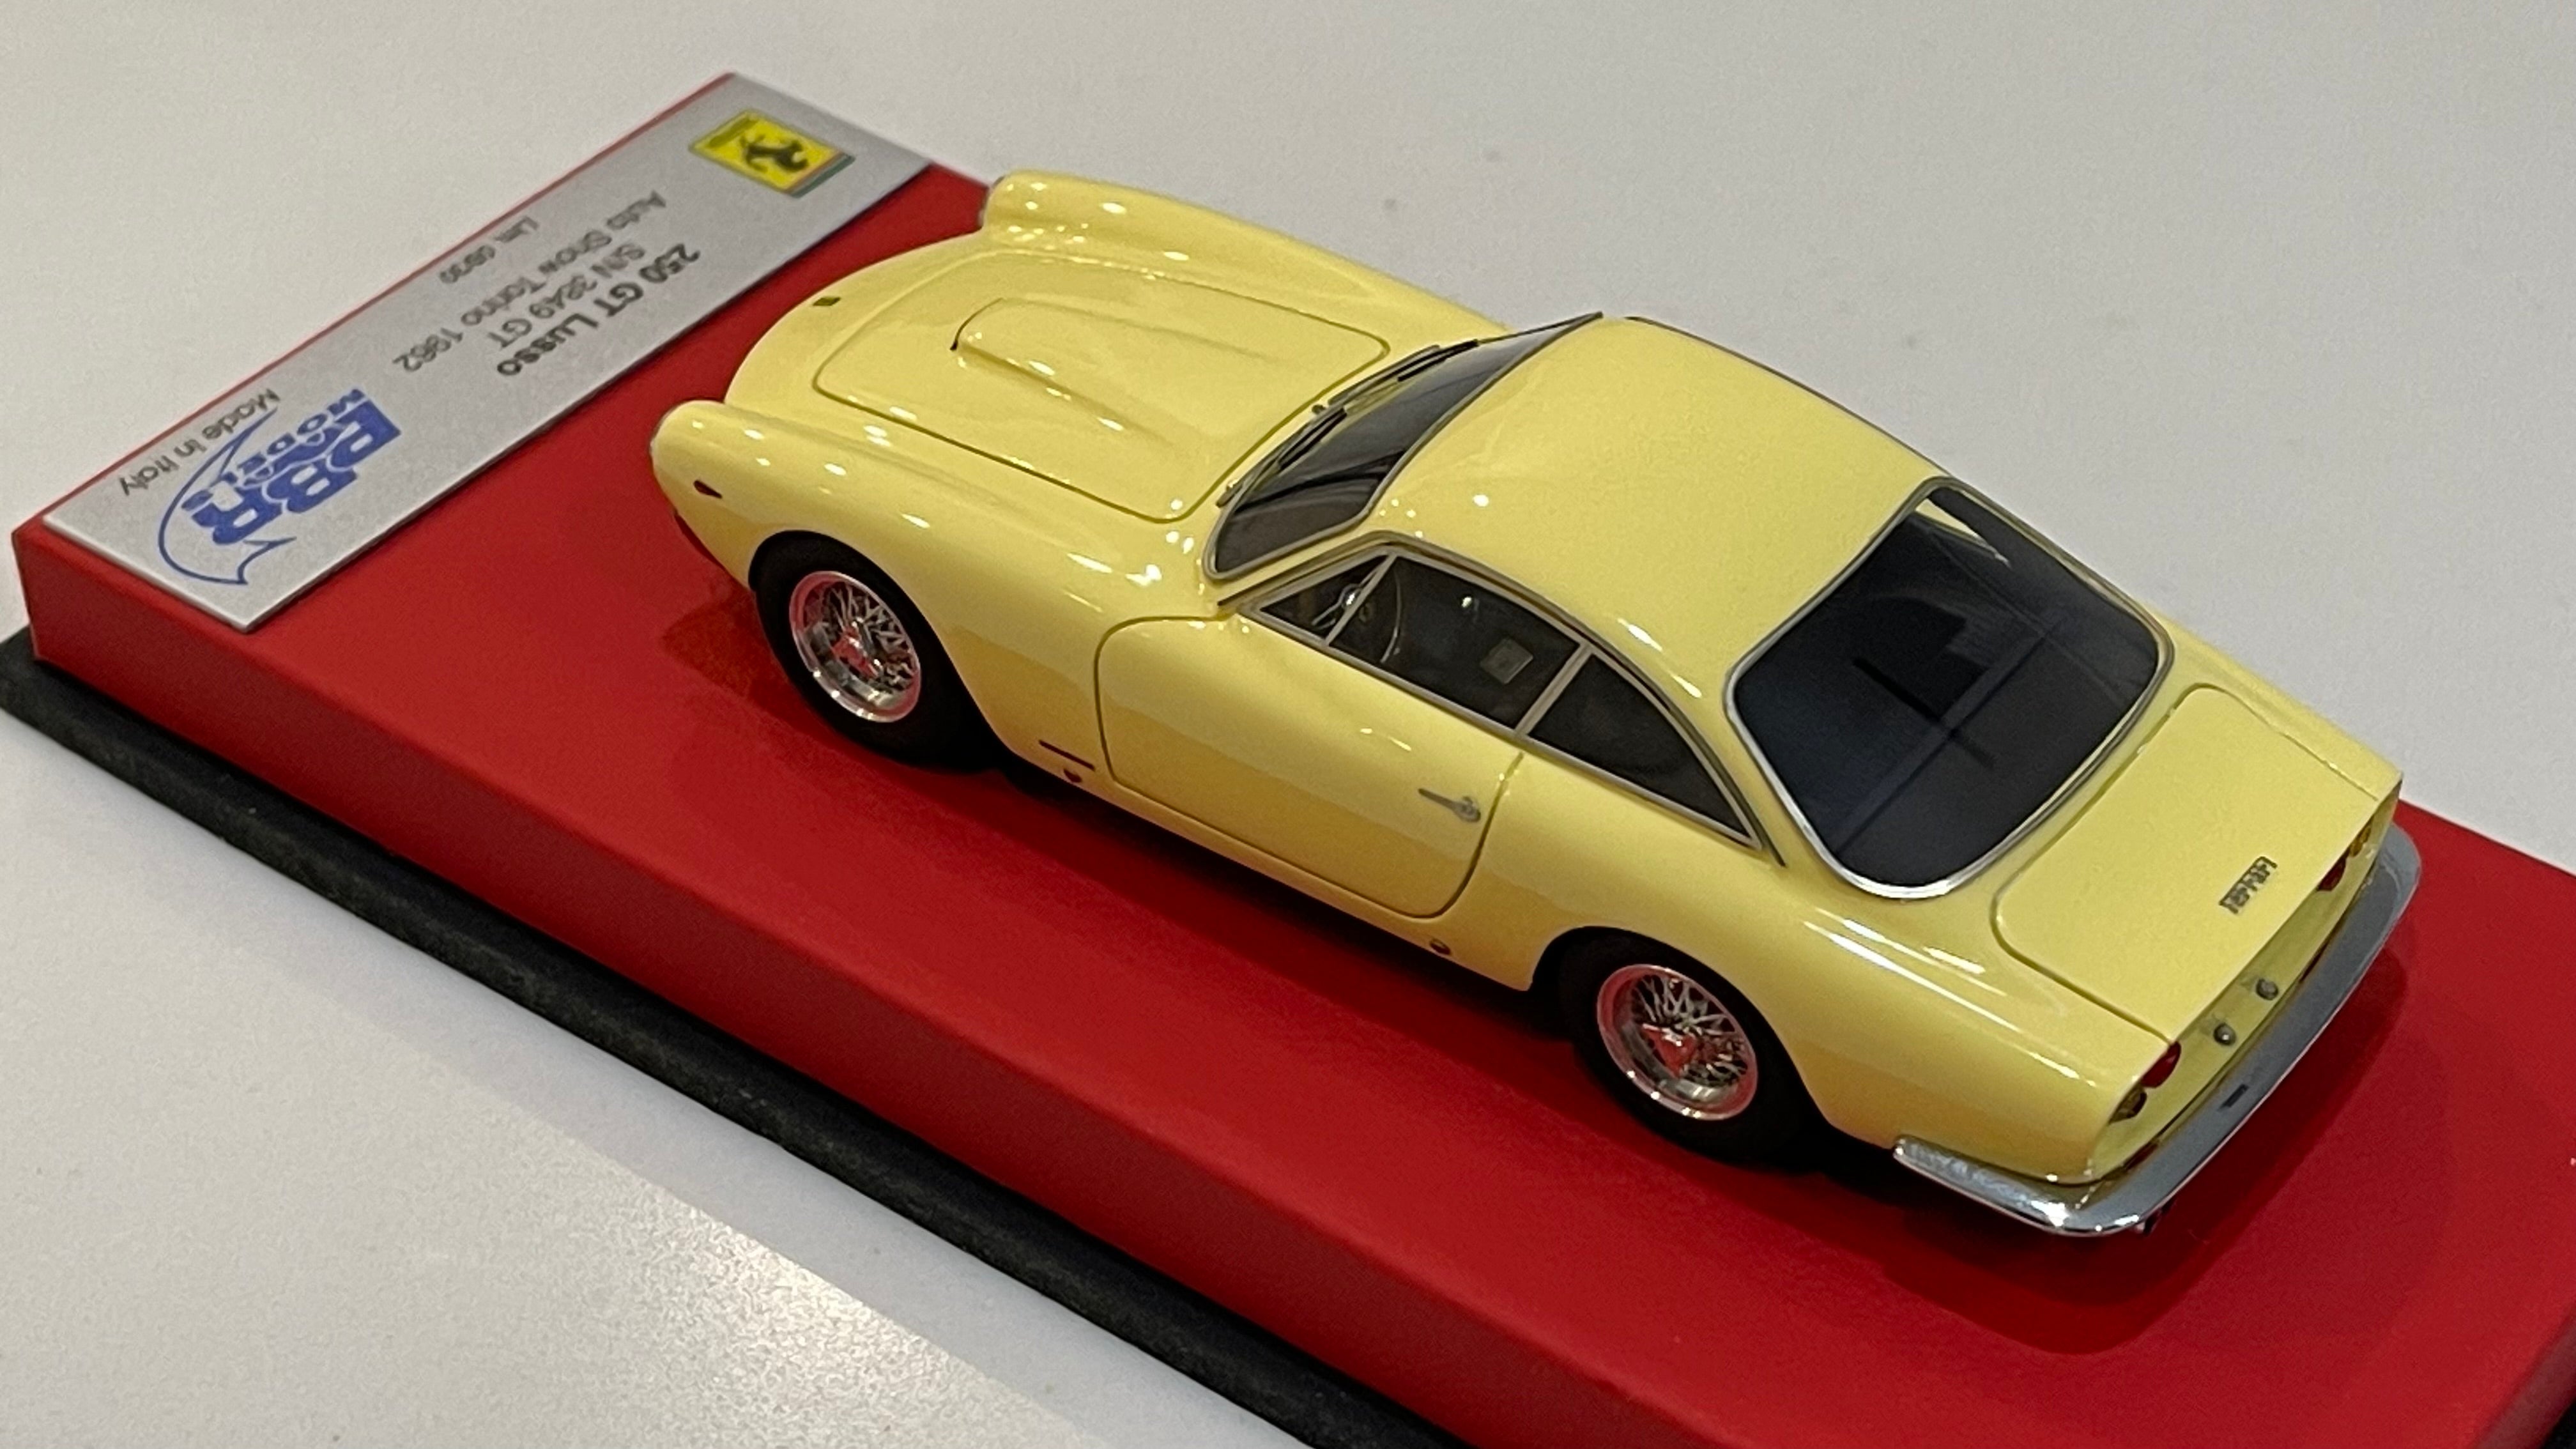 BBR 1/43 Ferrari 250 GT Lusso 3849GT 1962 Light Yellow CAR39ALB